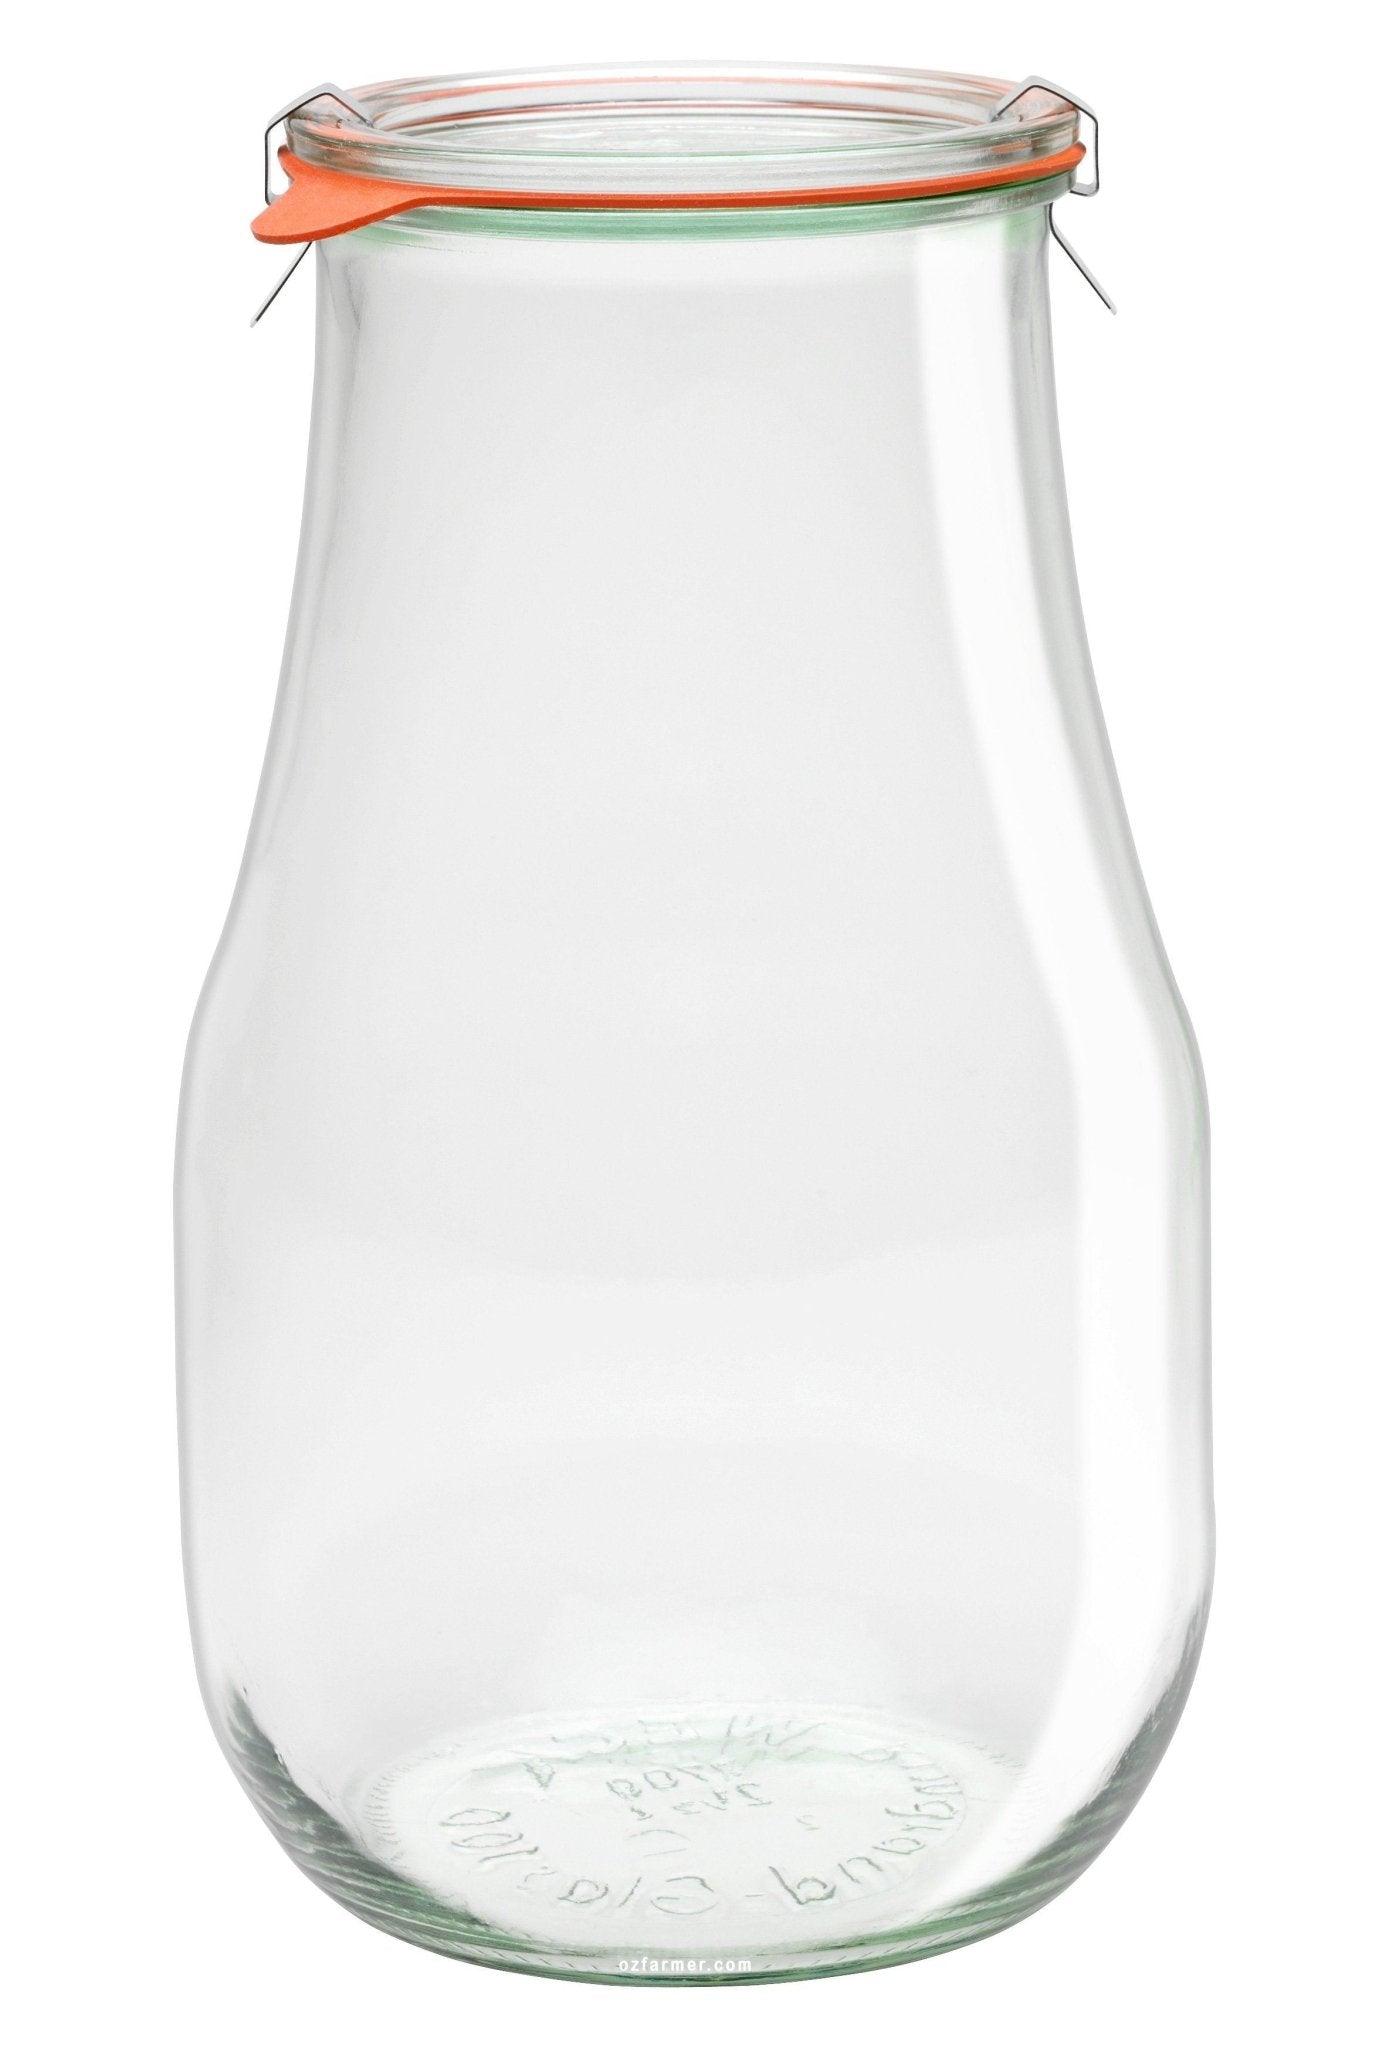 2.5 litre Tulip Jar Complete - 739 Weck - OzFarmer